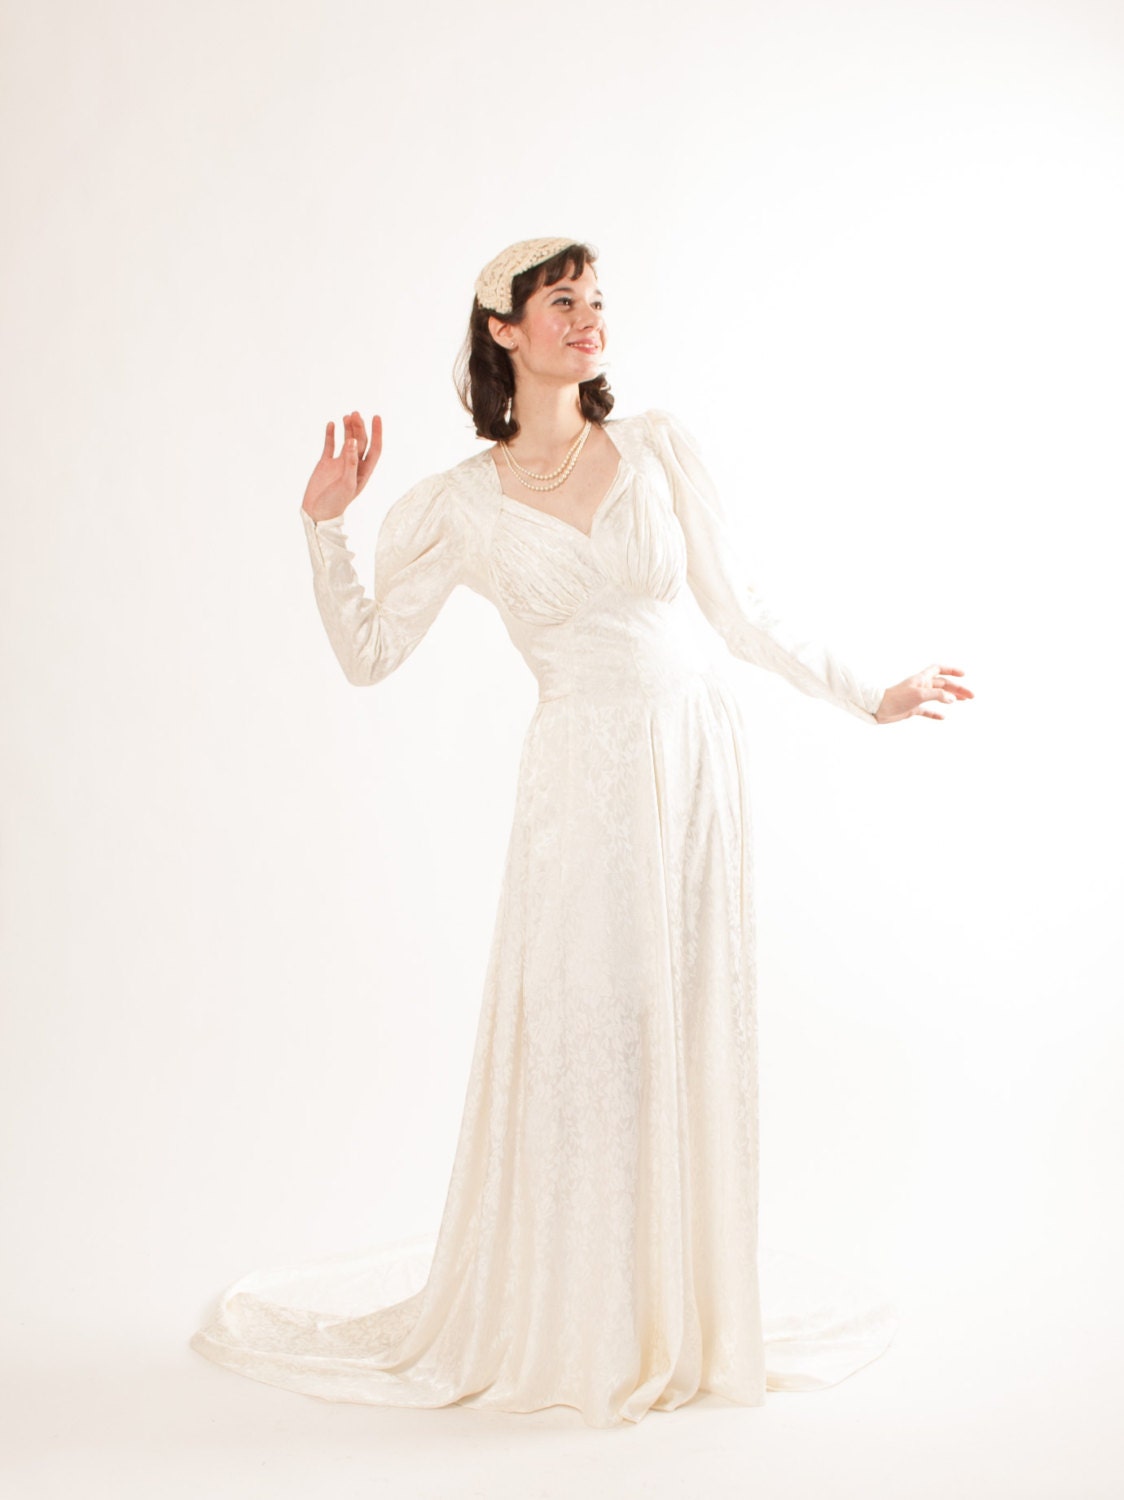 1940s Wedding Dress - 40s Wedding Gown - WWII Era Bride - Ivory Floral